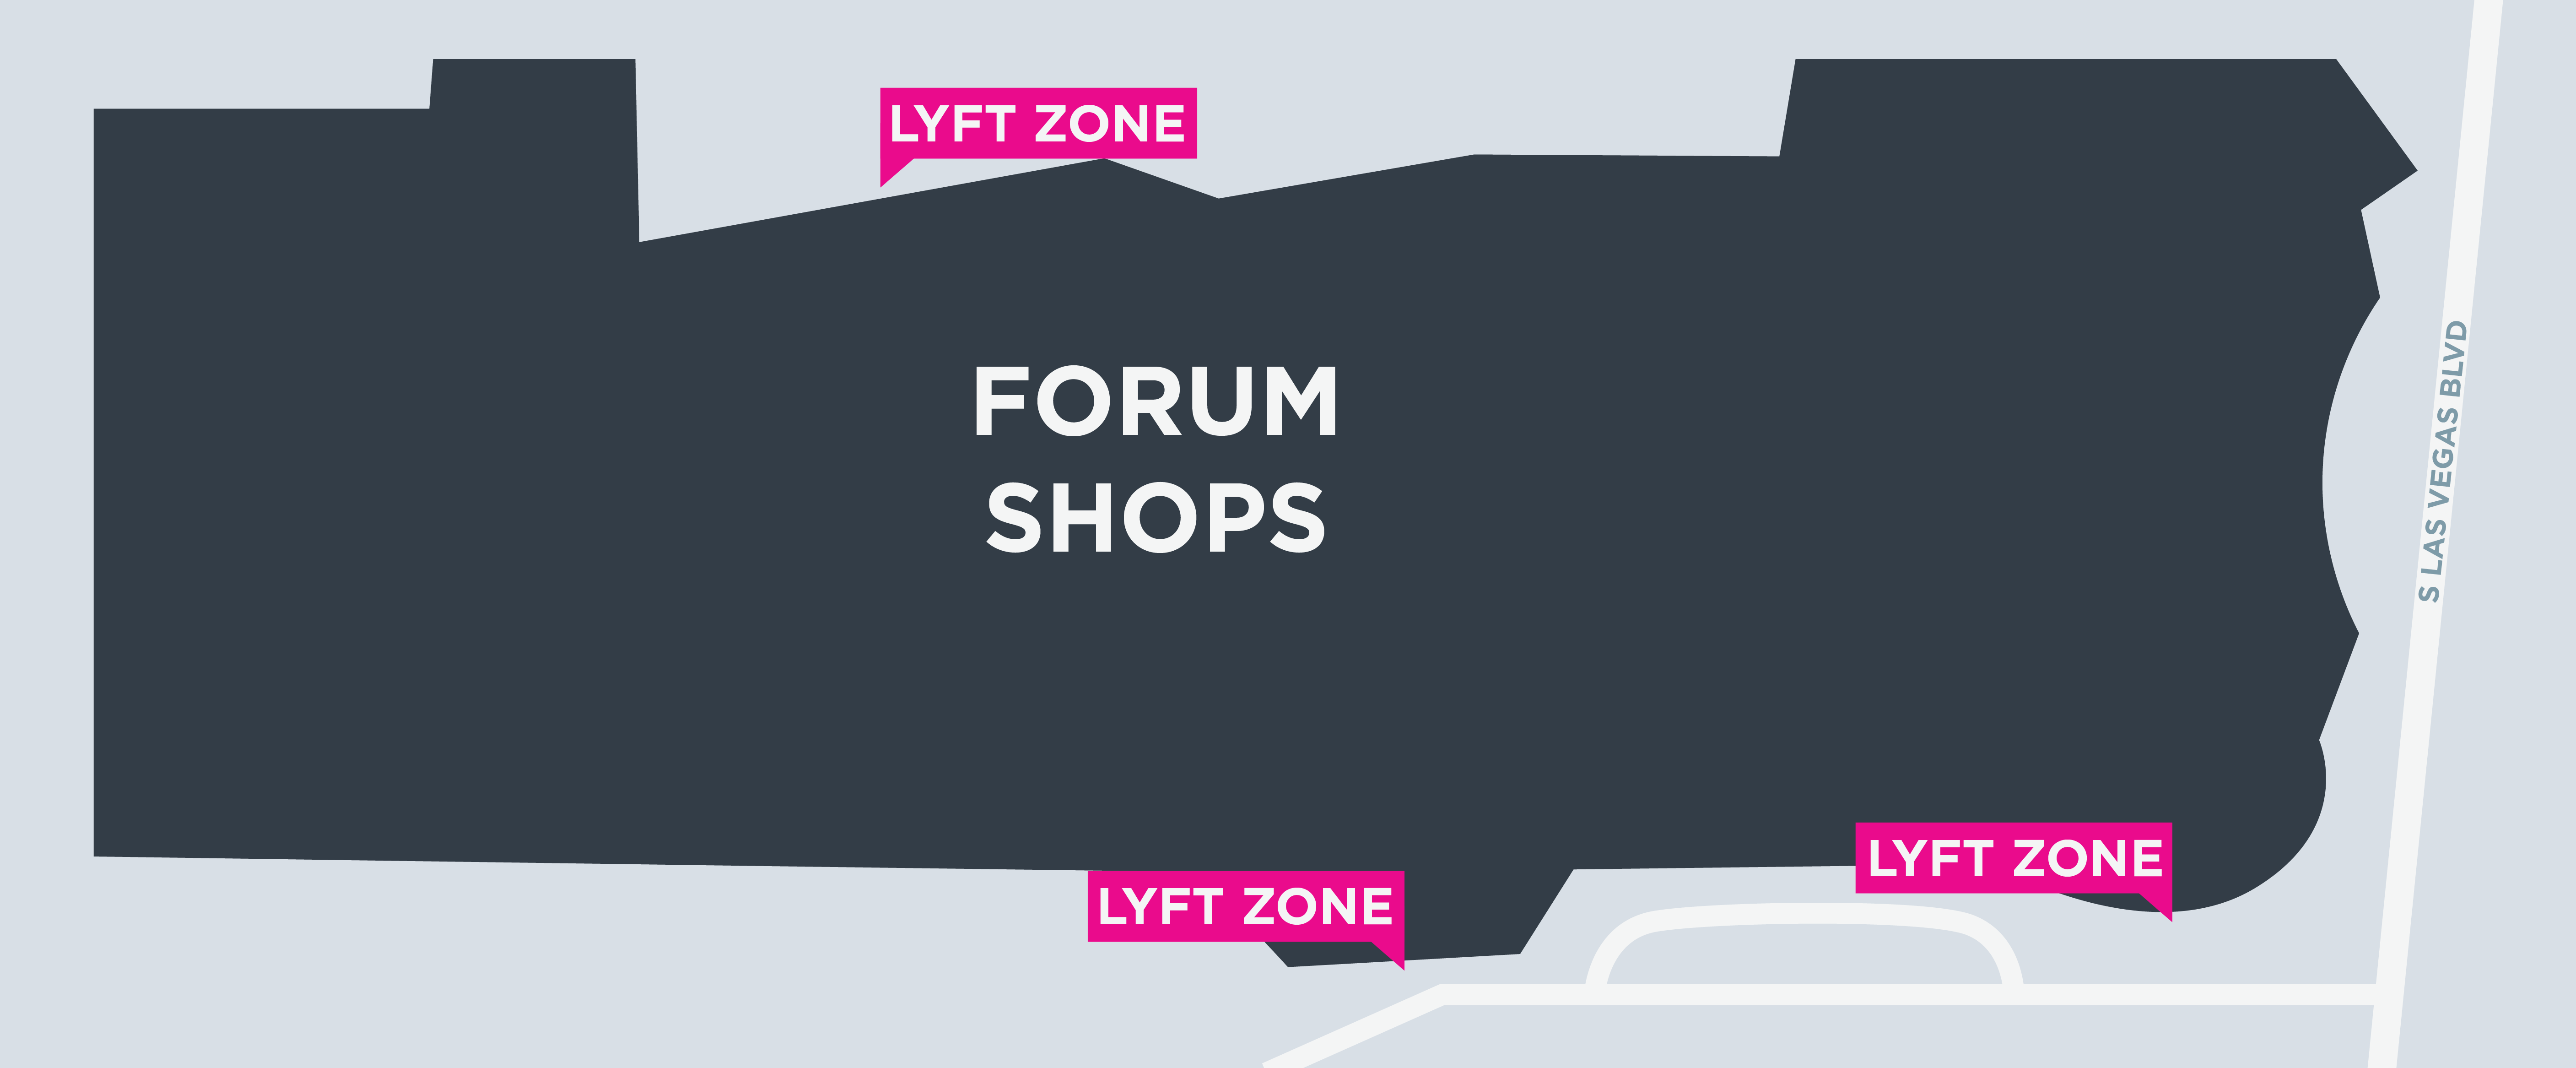 Map of the Lyft zones at Forum in Las Vegas.